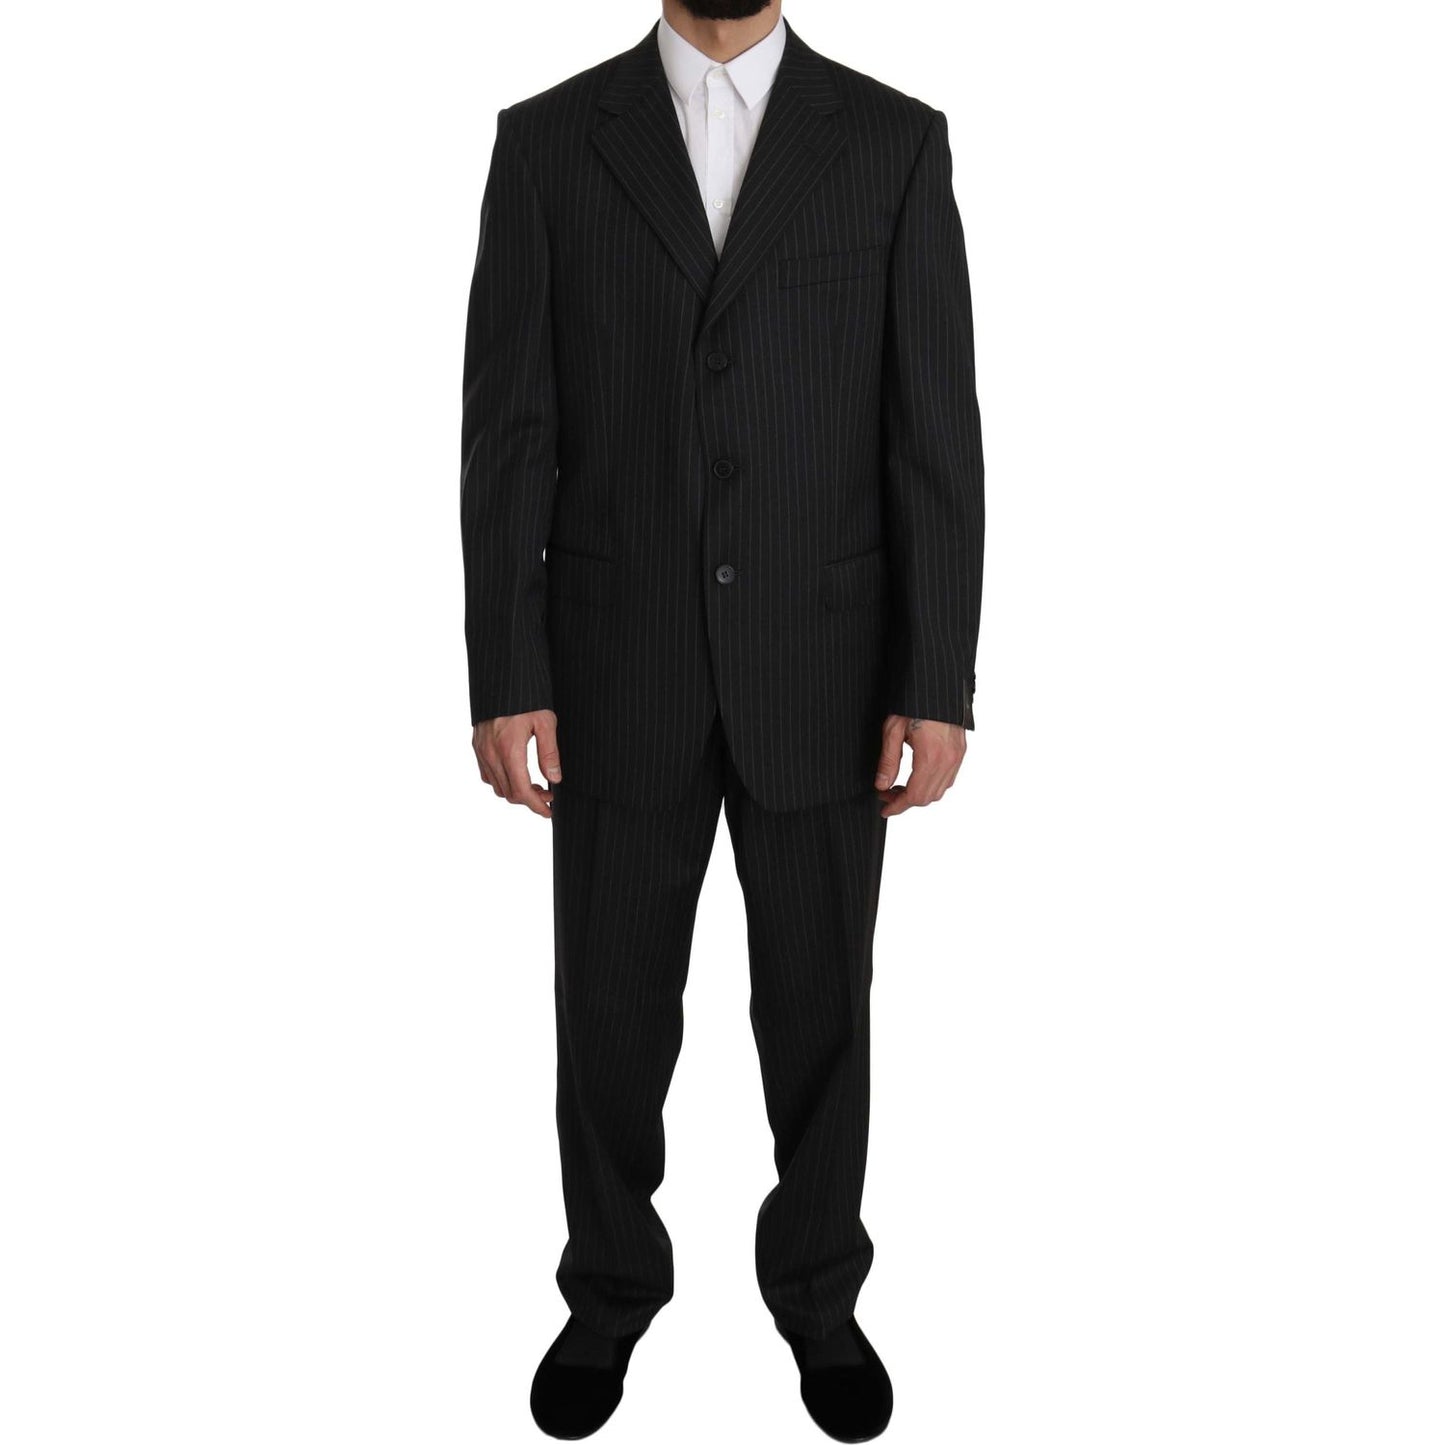 Z ZEGNA Elegant Black Striped Wool Suit Suit black-striped-two-piece-3-button-100-wool-suit IMG_7796-scaled.jpg